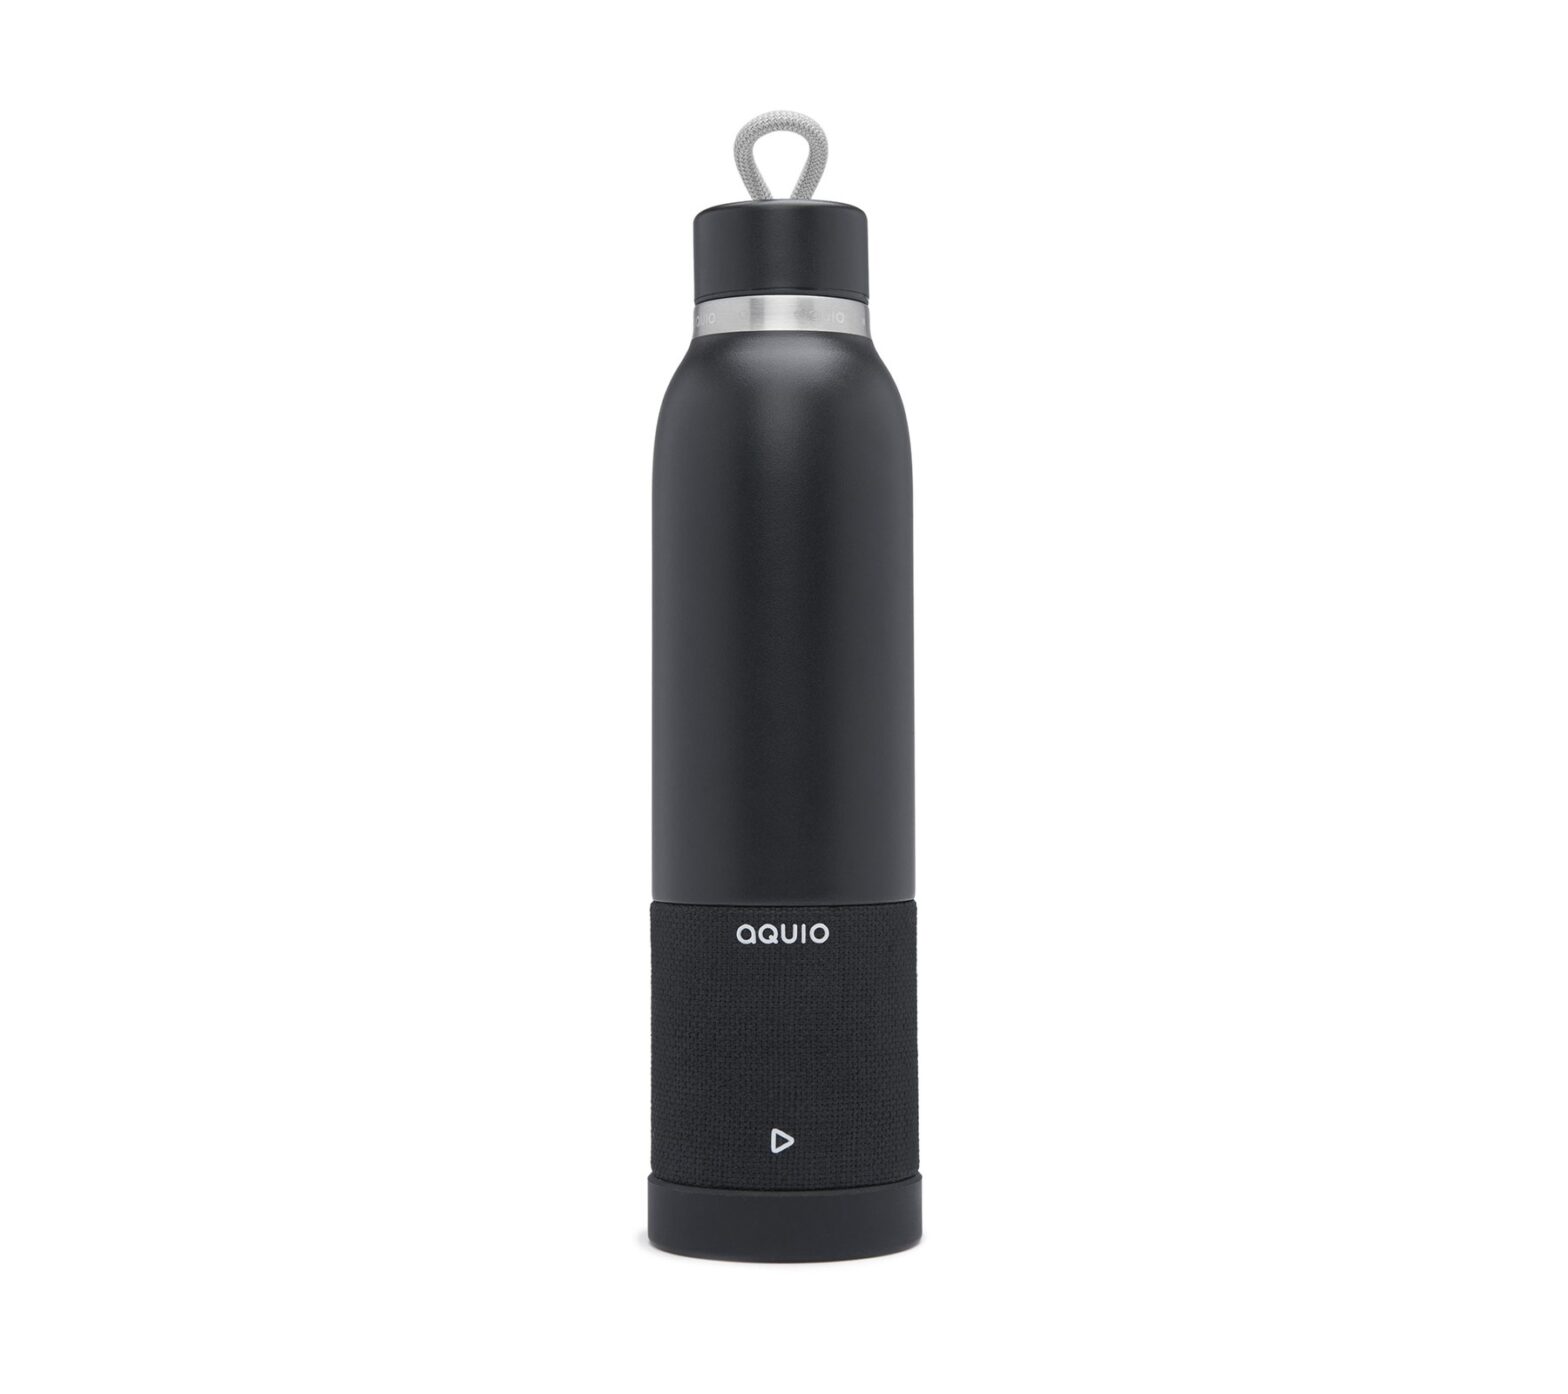 iHome aquio Bottle with Waterproof Bluetooth Speaker Instruction Manual